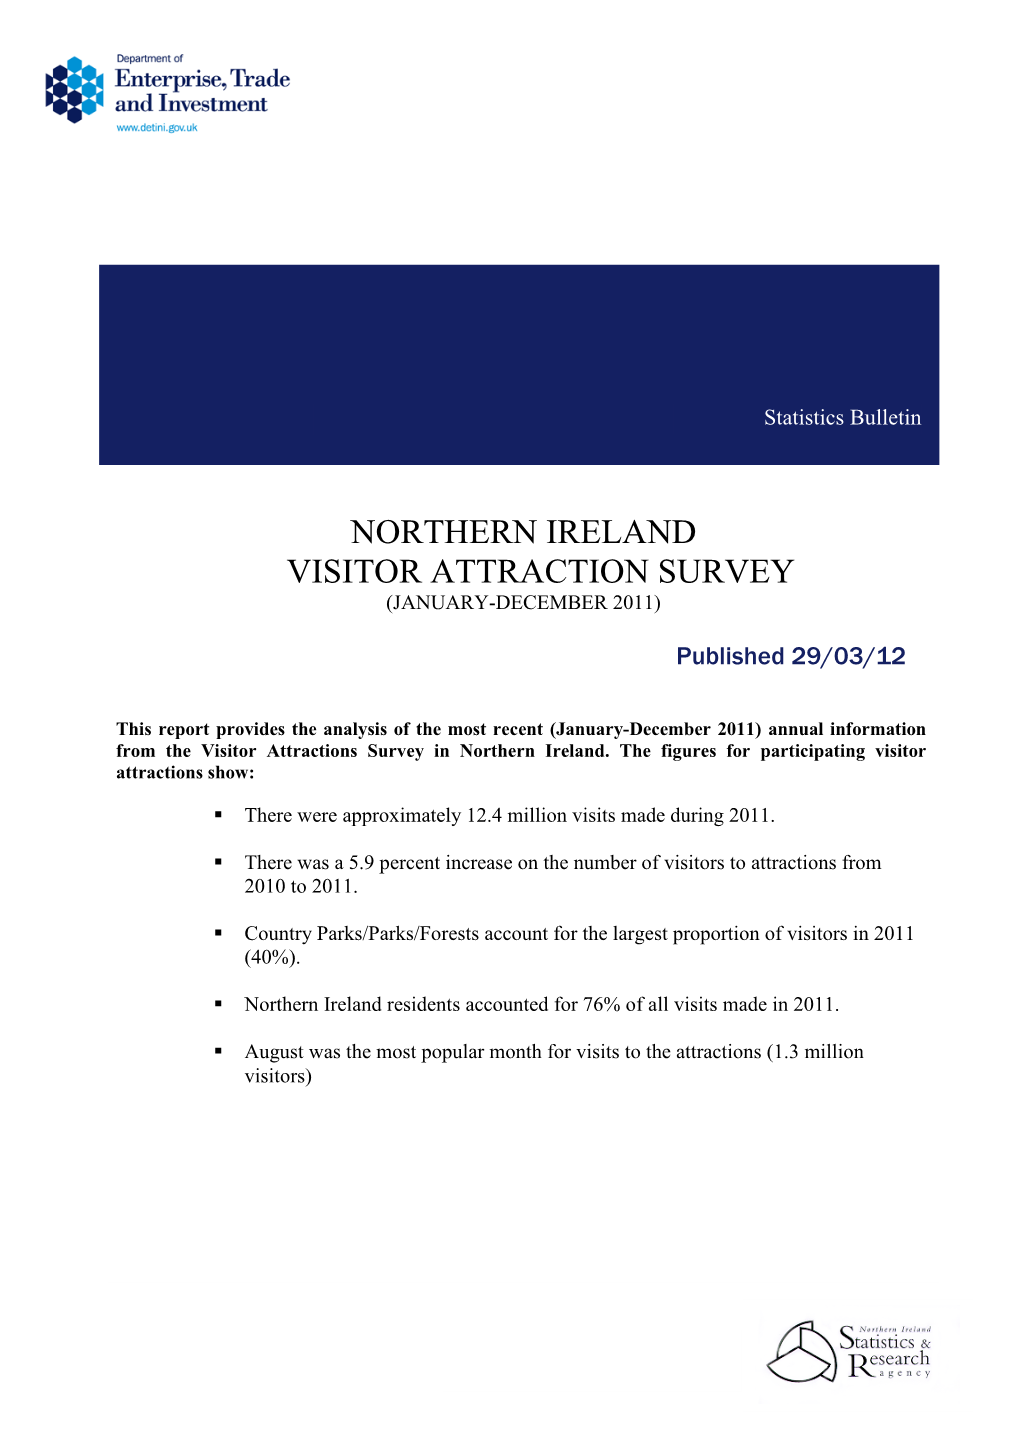 Northern Ireland Visitor Attraction Survey 2011